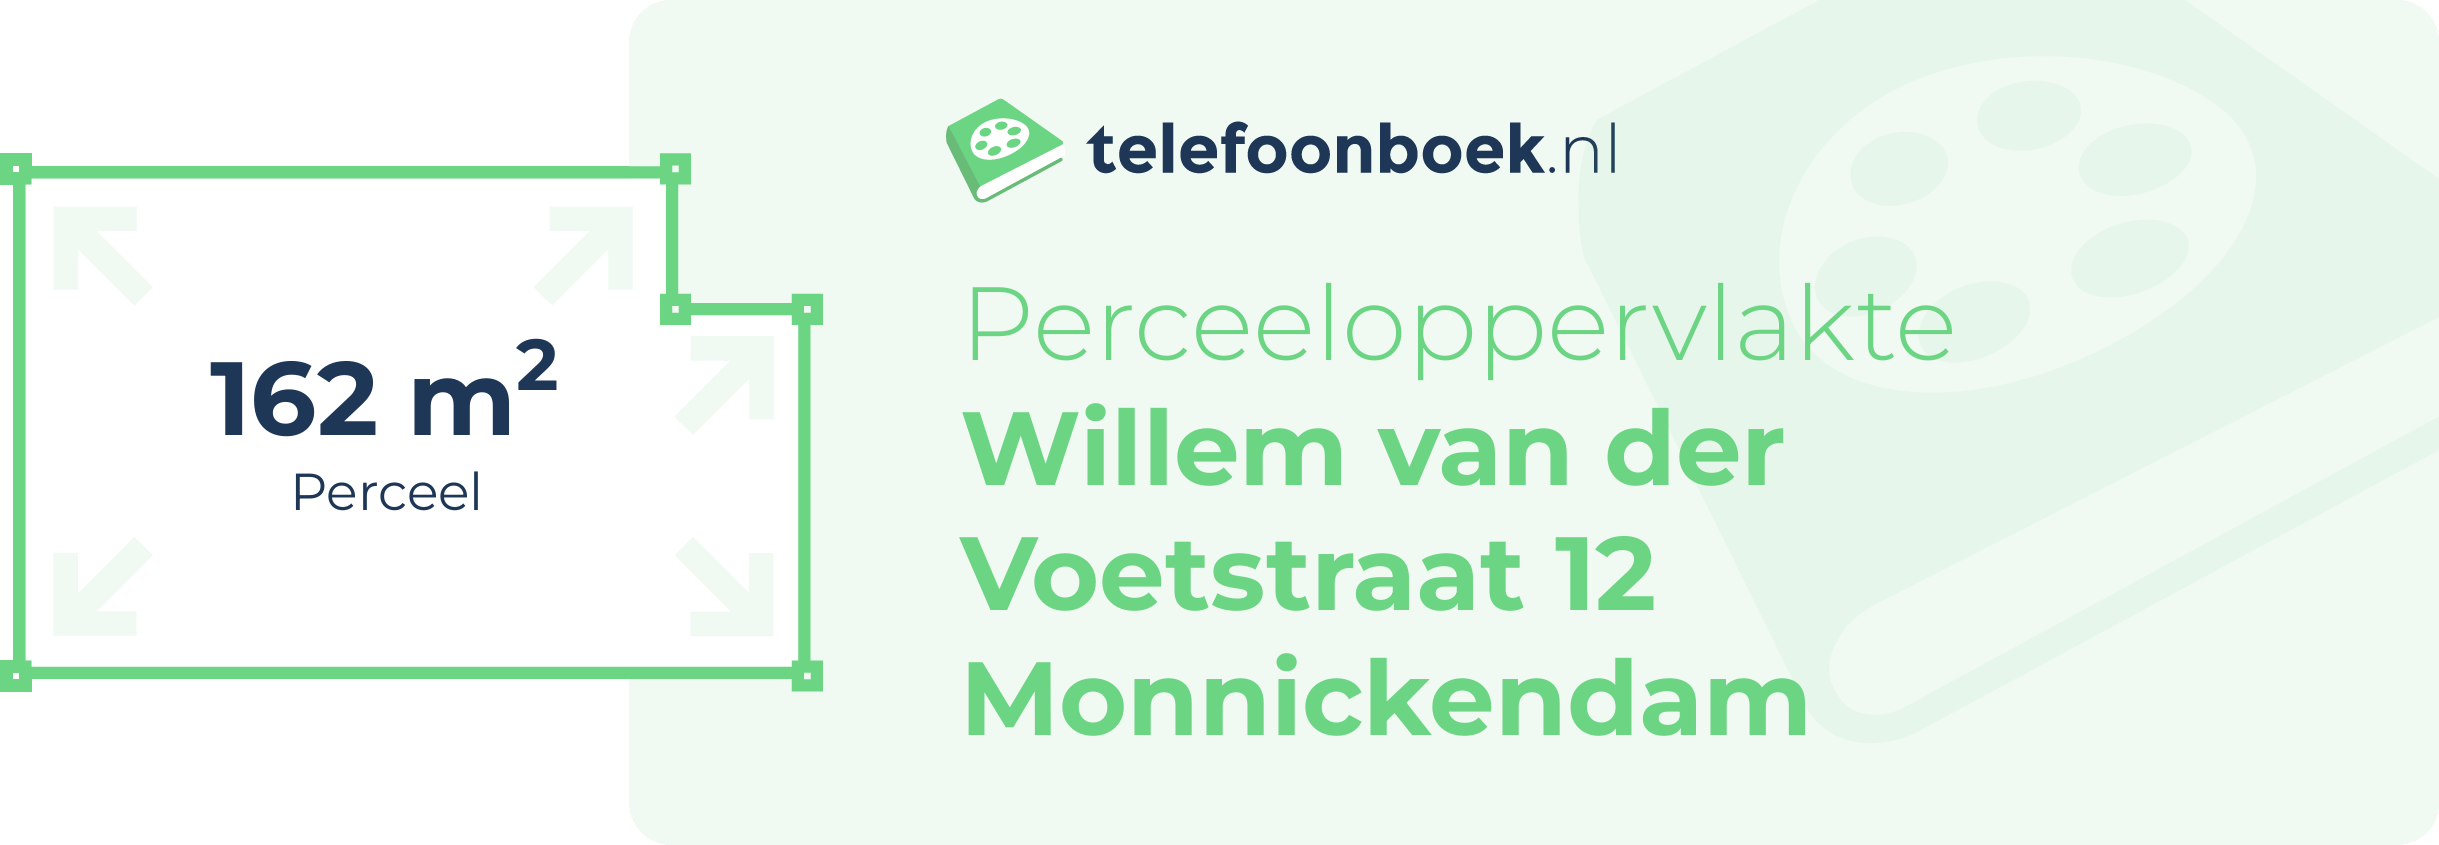 Perceeloppervlakte Willem Van Der Voetstraat 12 Monnickendam